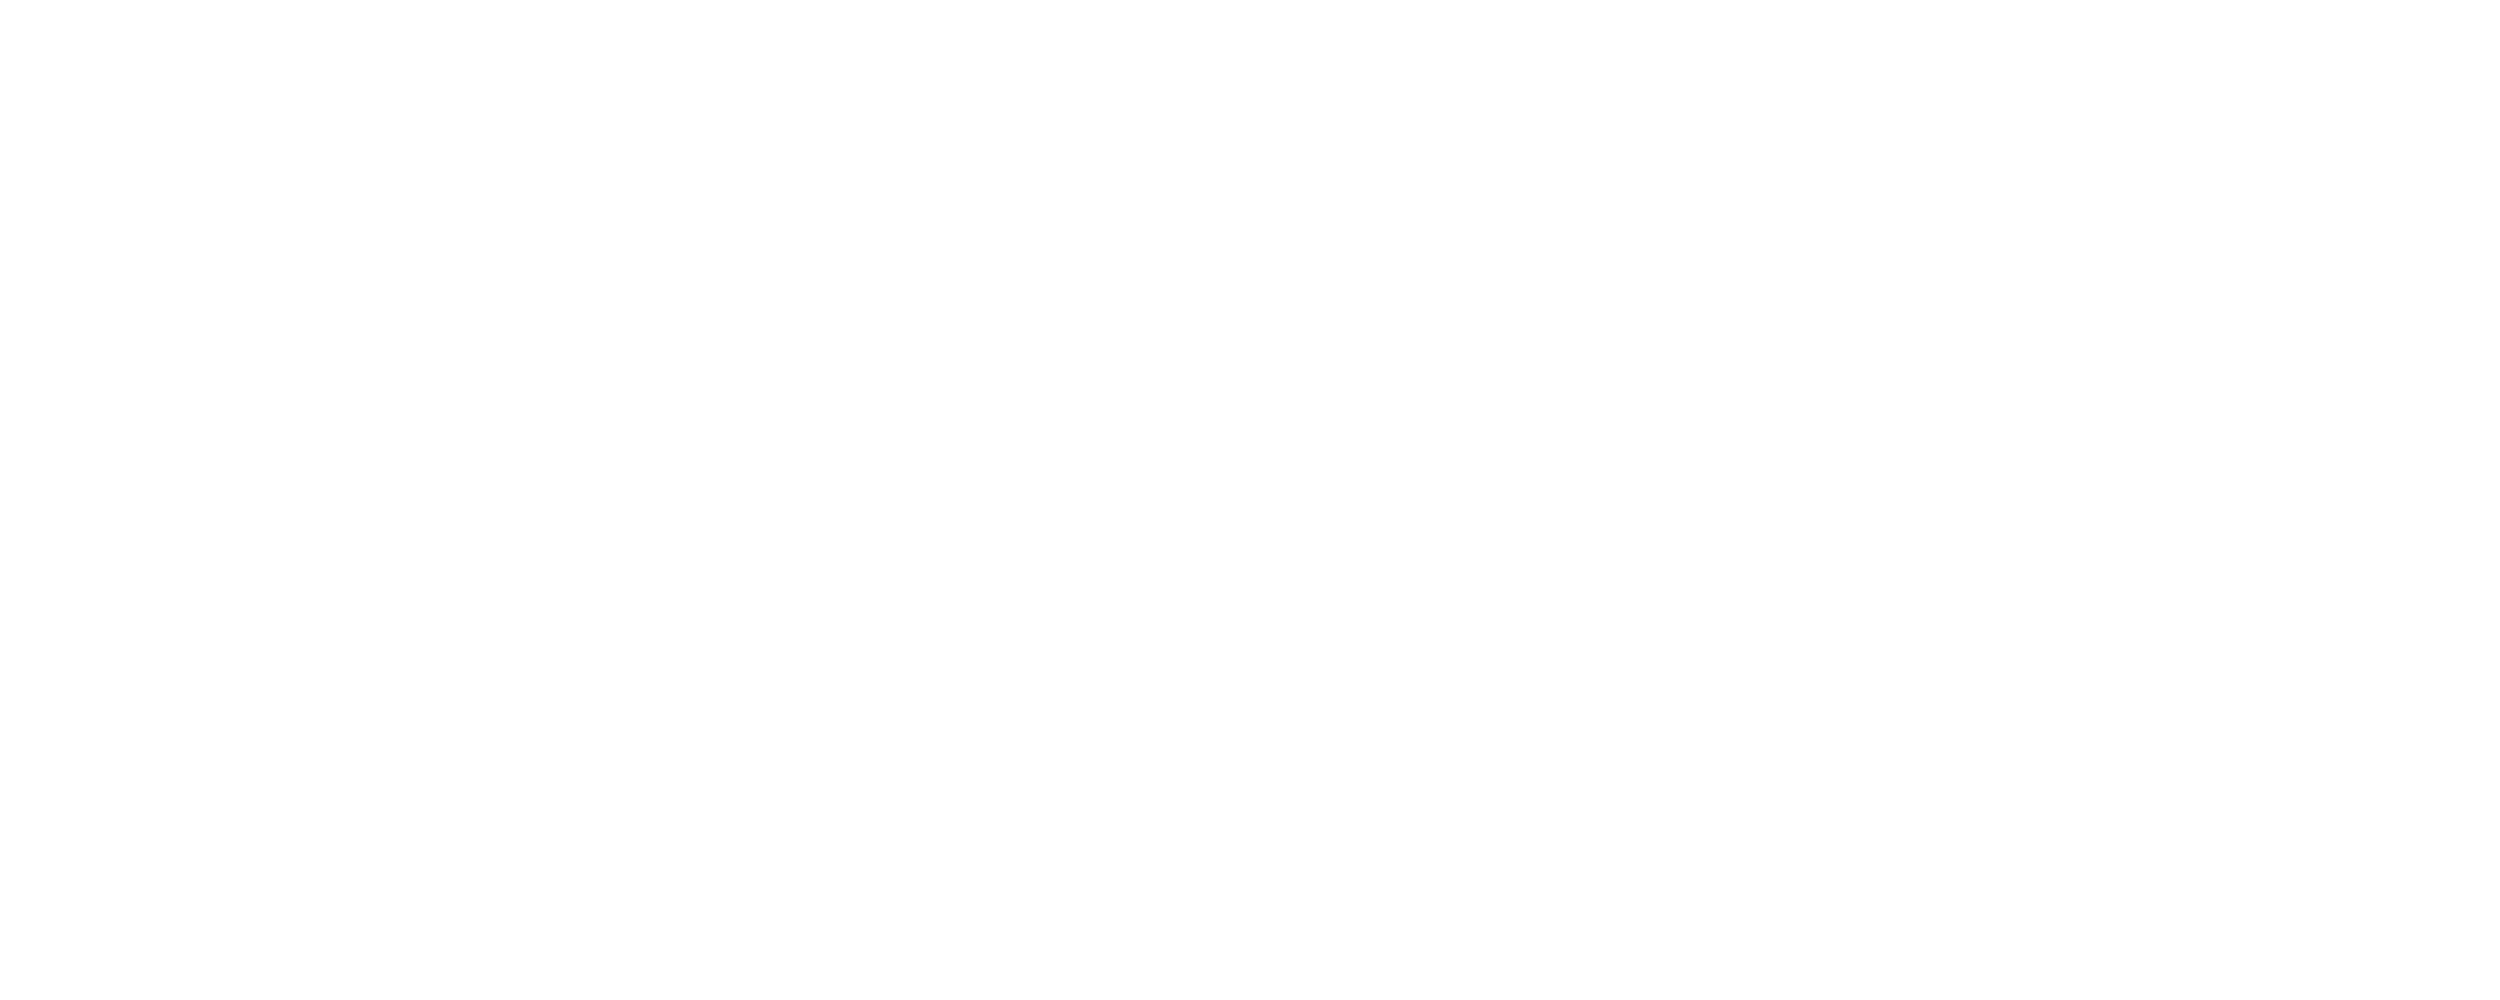 Nolita Hall